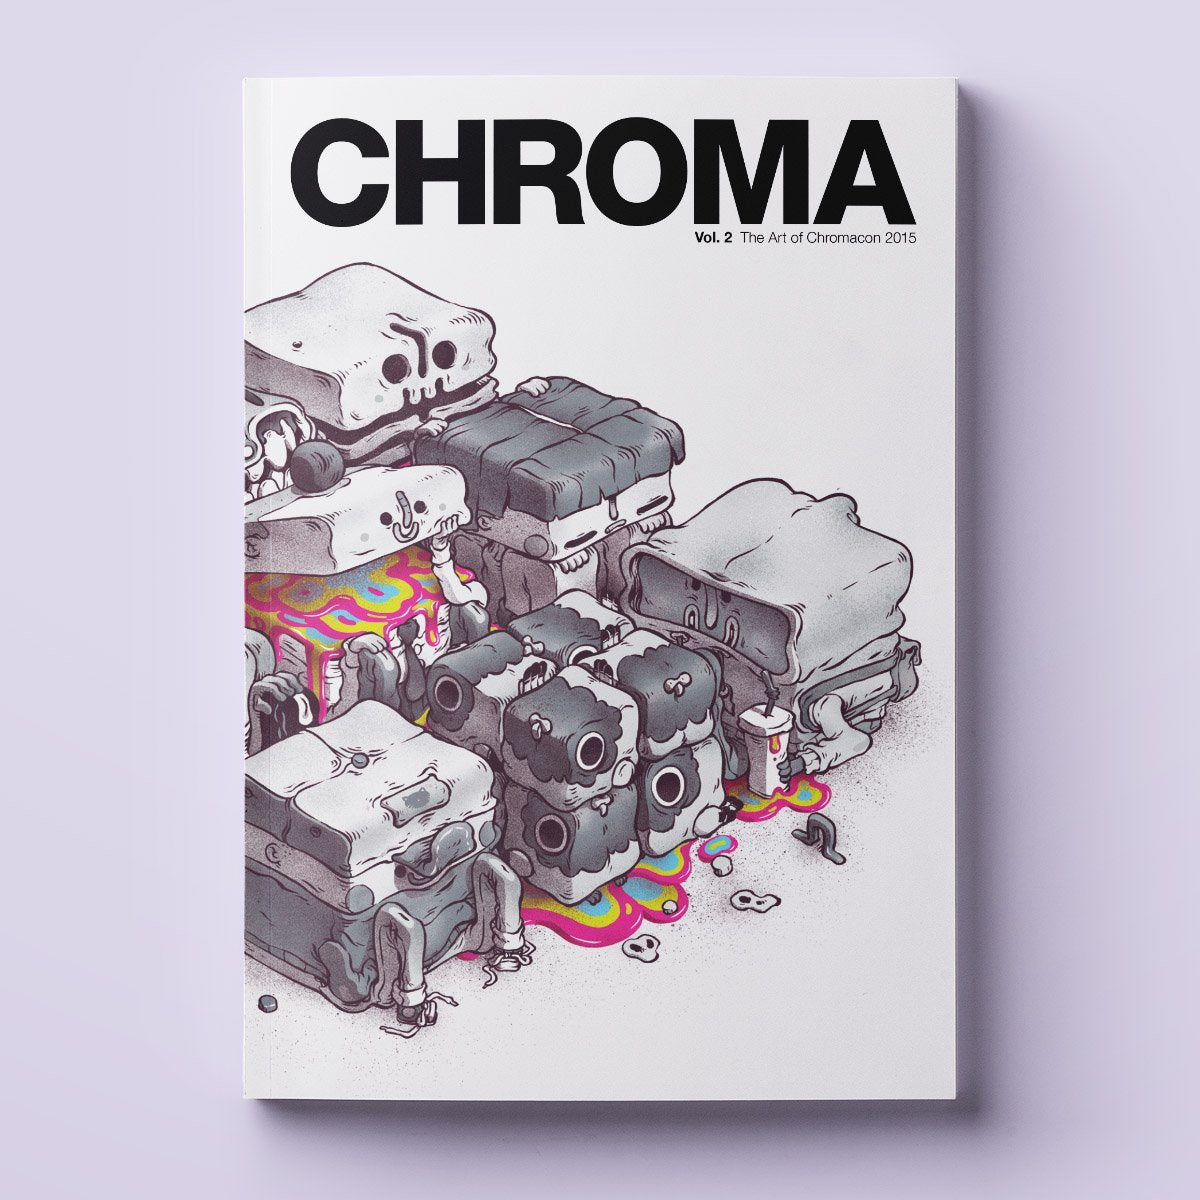 CHROMA Vol. 2: The Art of Chromacon 2015